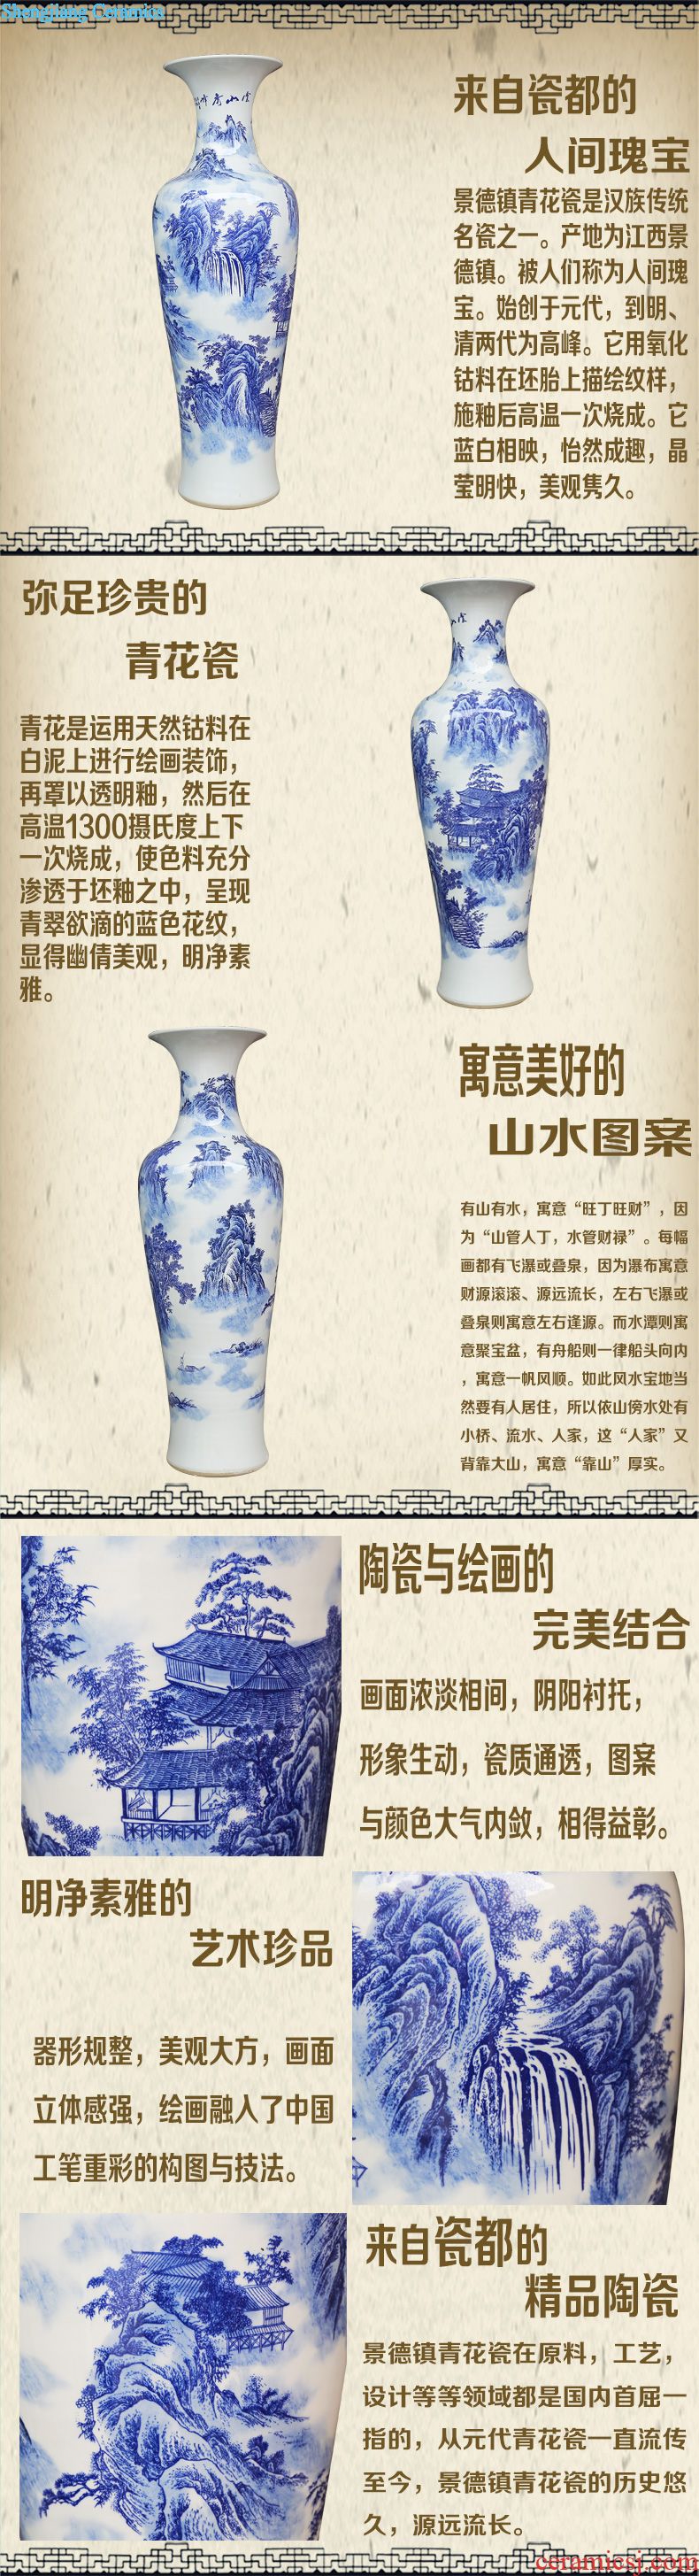 Jun porcelain vase of jingdezhen ceramics kiln flower glaze modern classical home sitting room adornment handicraft furnishing articles